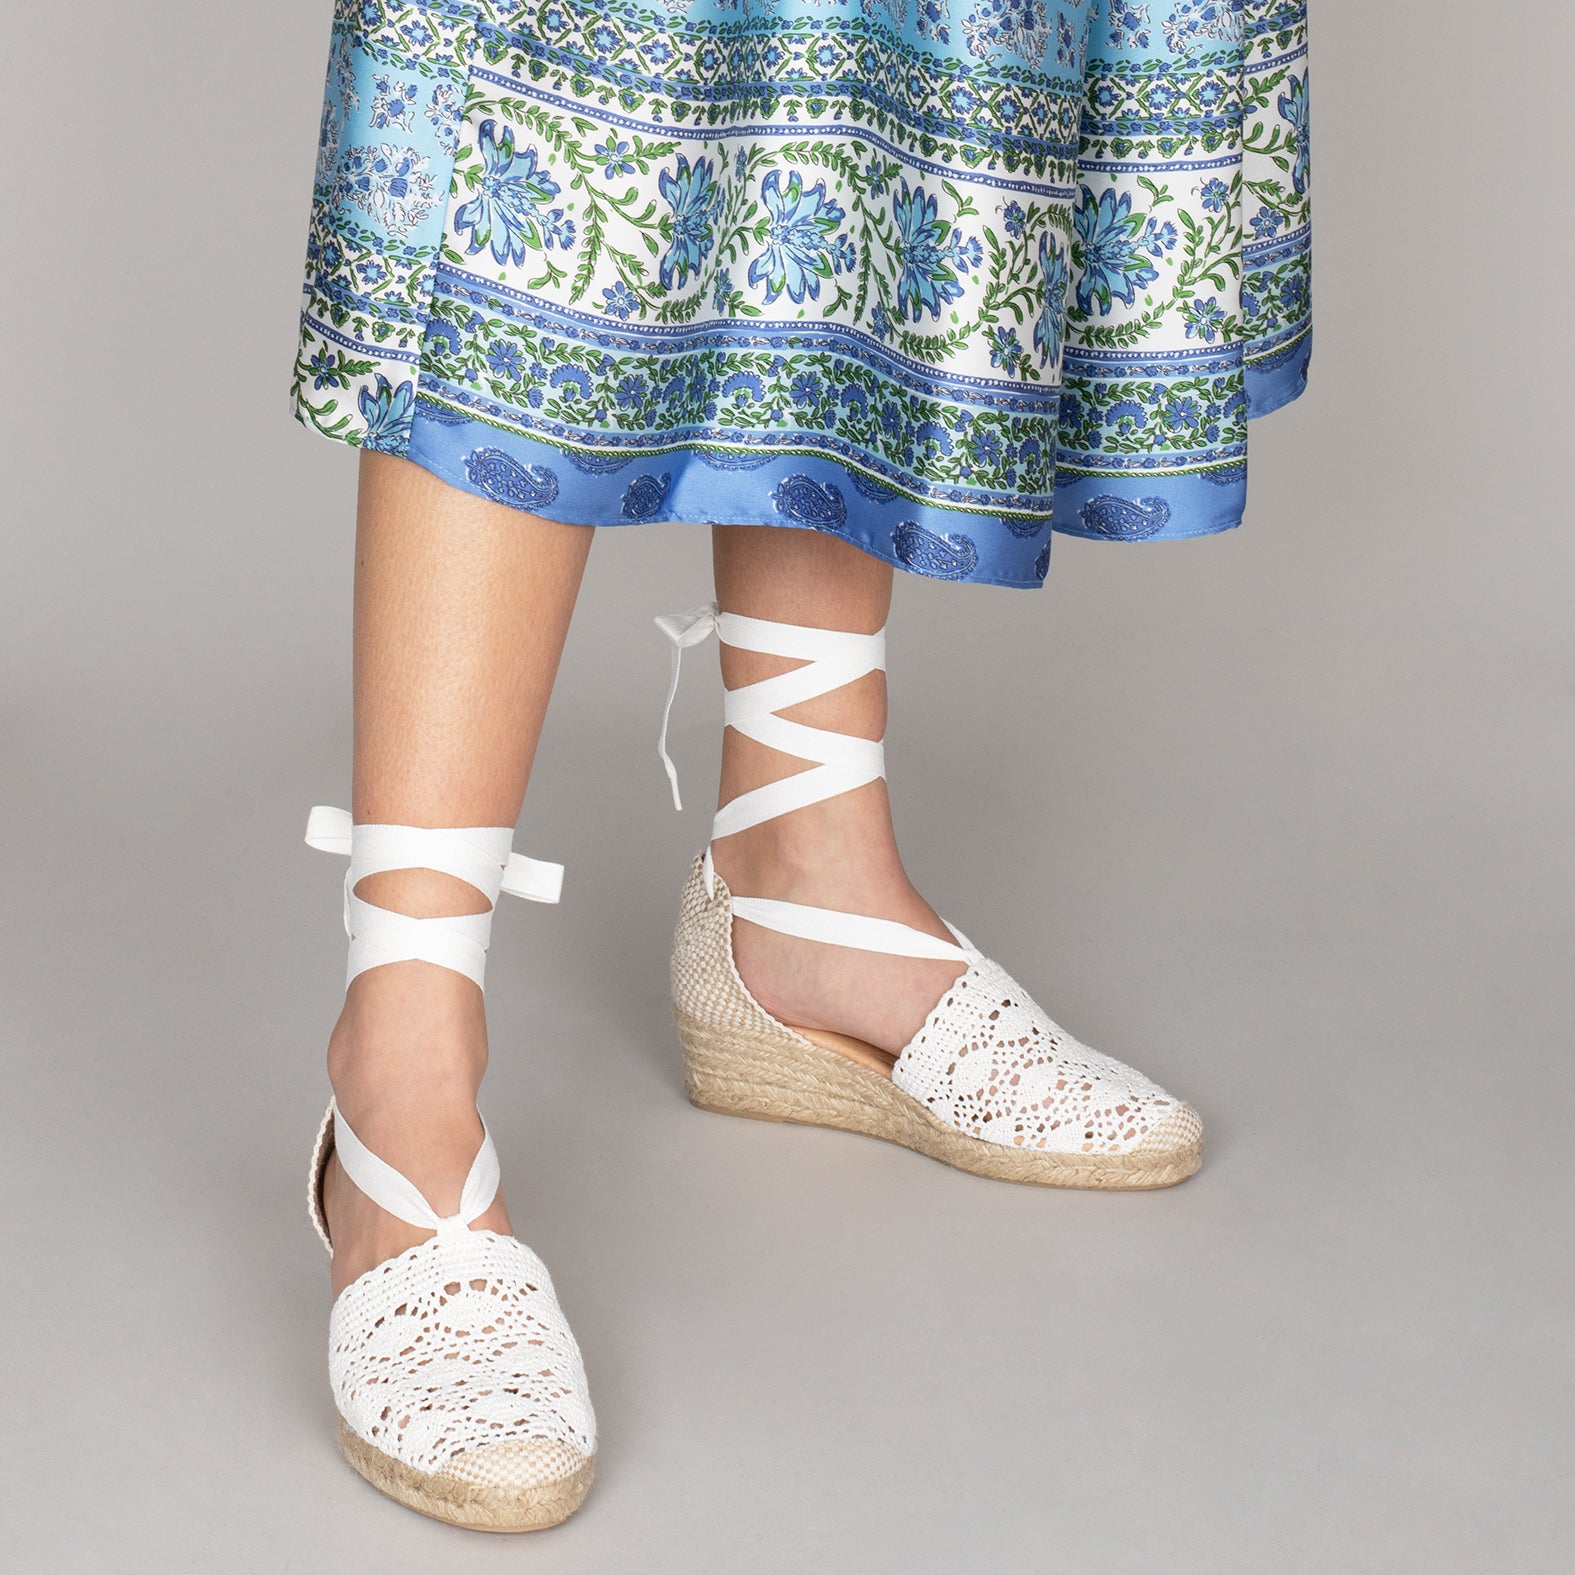 DEIÀ – WHITE crocheted espadrilles with laces